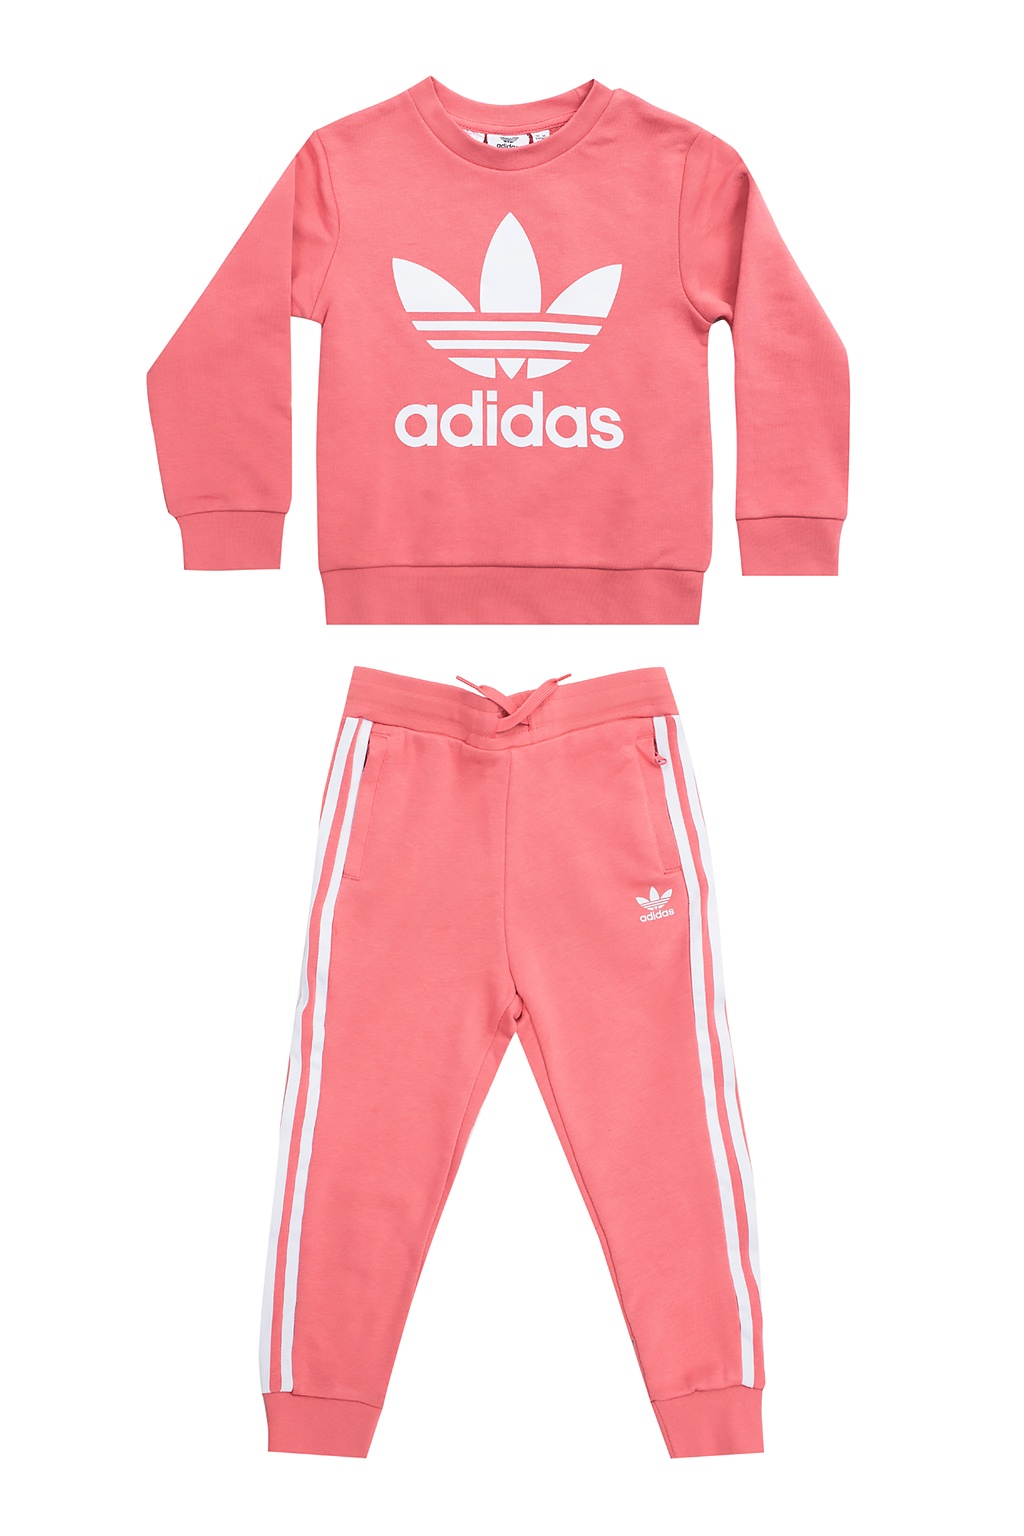 adidas hoodie and sweatpants set